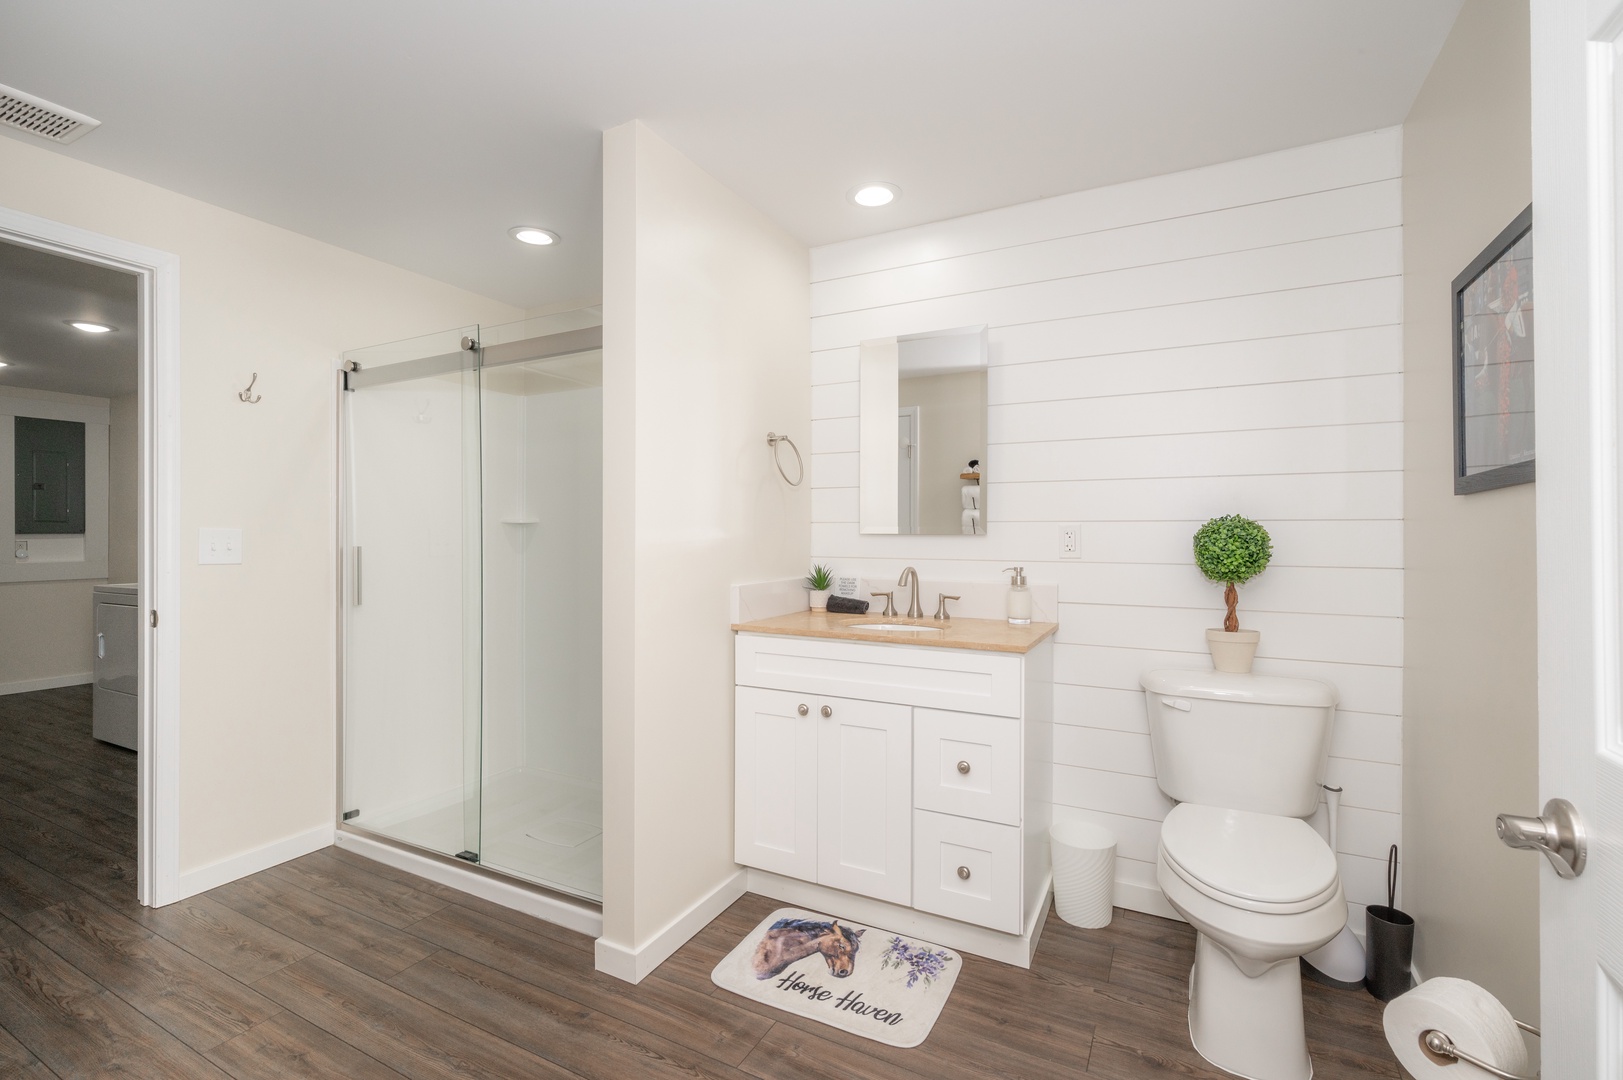 The final full bathroom includes a single vanity & sleek glass shower